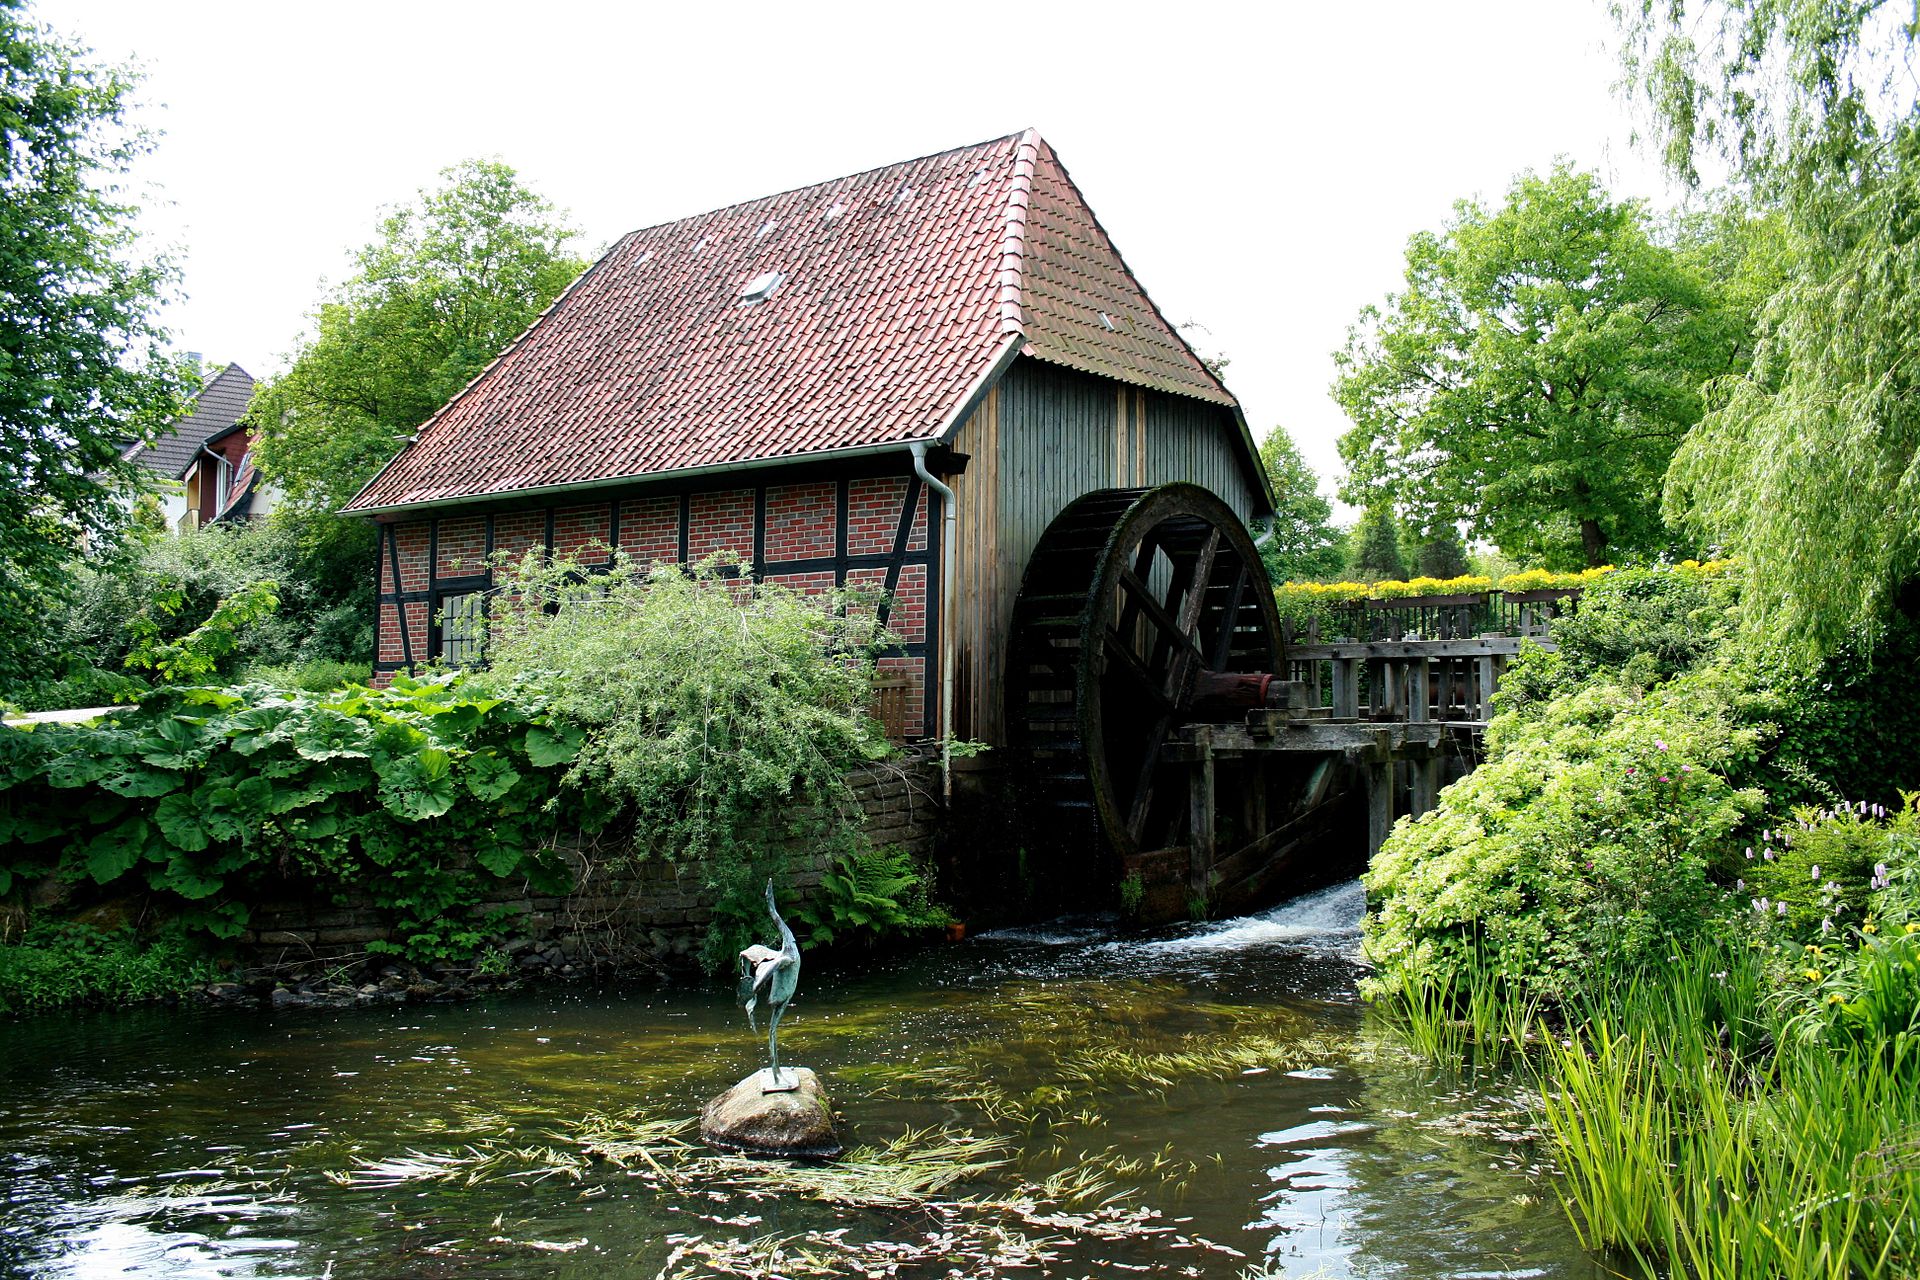 Wassermühle Munster [Frank Vincentz, CC BY-SA 3.0]